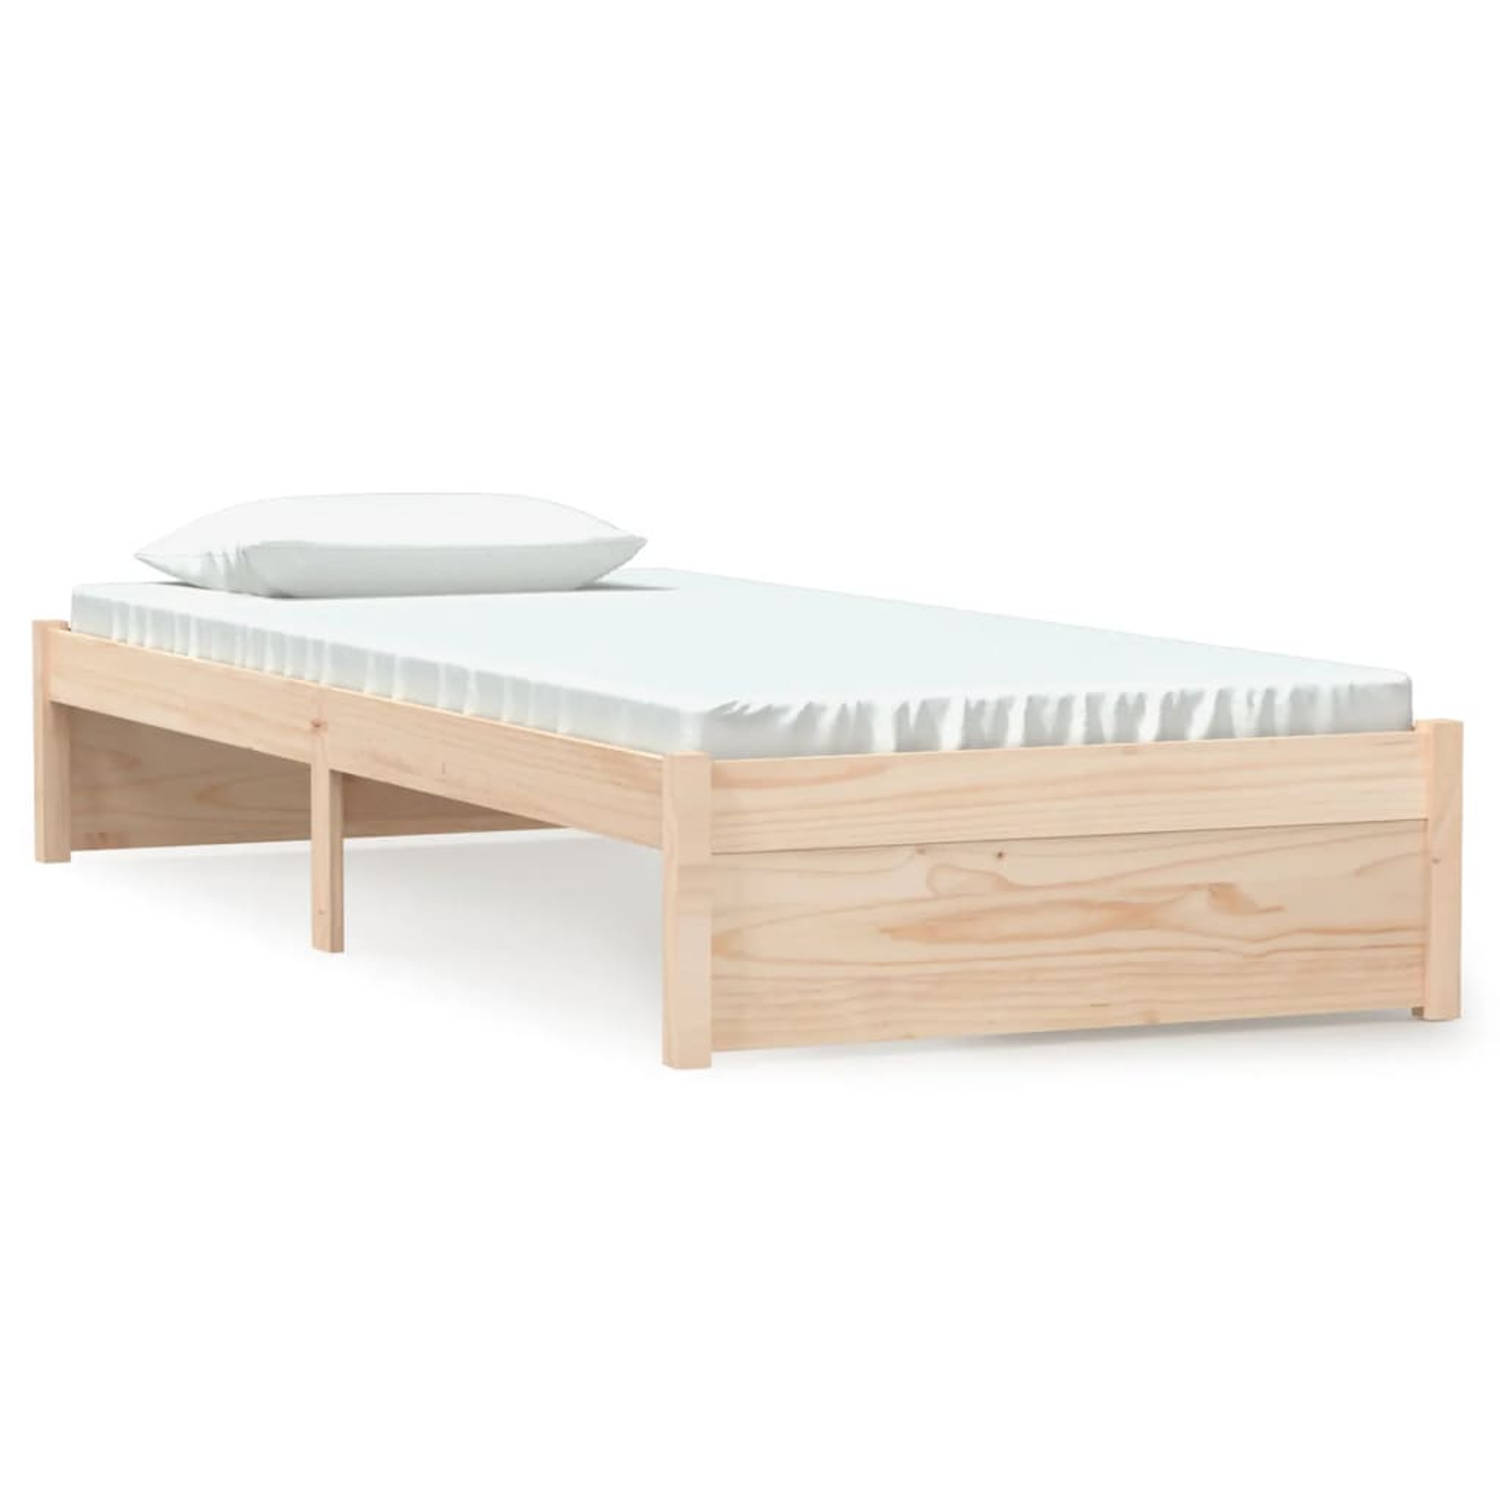 The Living Store Bedframe massief hout 75x190 cm 2FT6 Small Single - Bedframe - Bedframes - Bed - Bedbodem - Ledikant - Bed Frame - Massief Houten Bedframe - Slaapmeubel - Eenperso